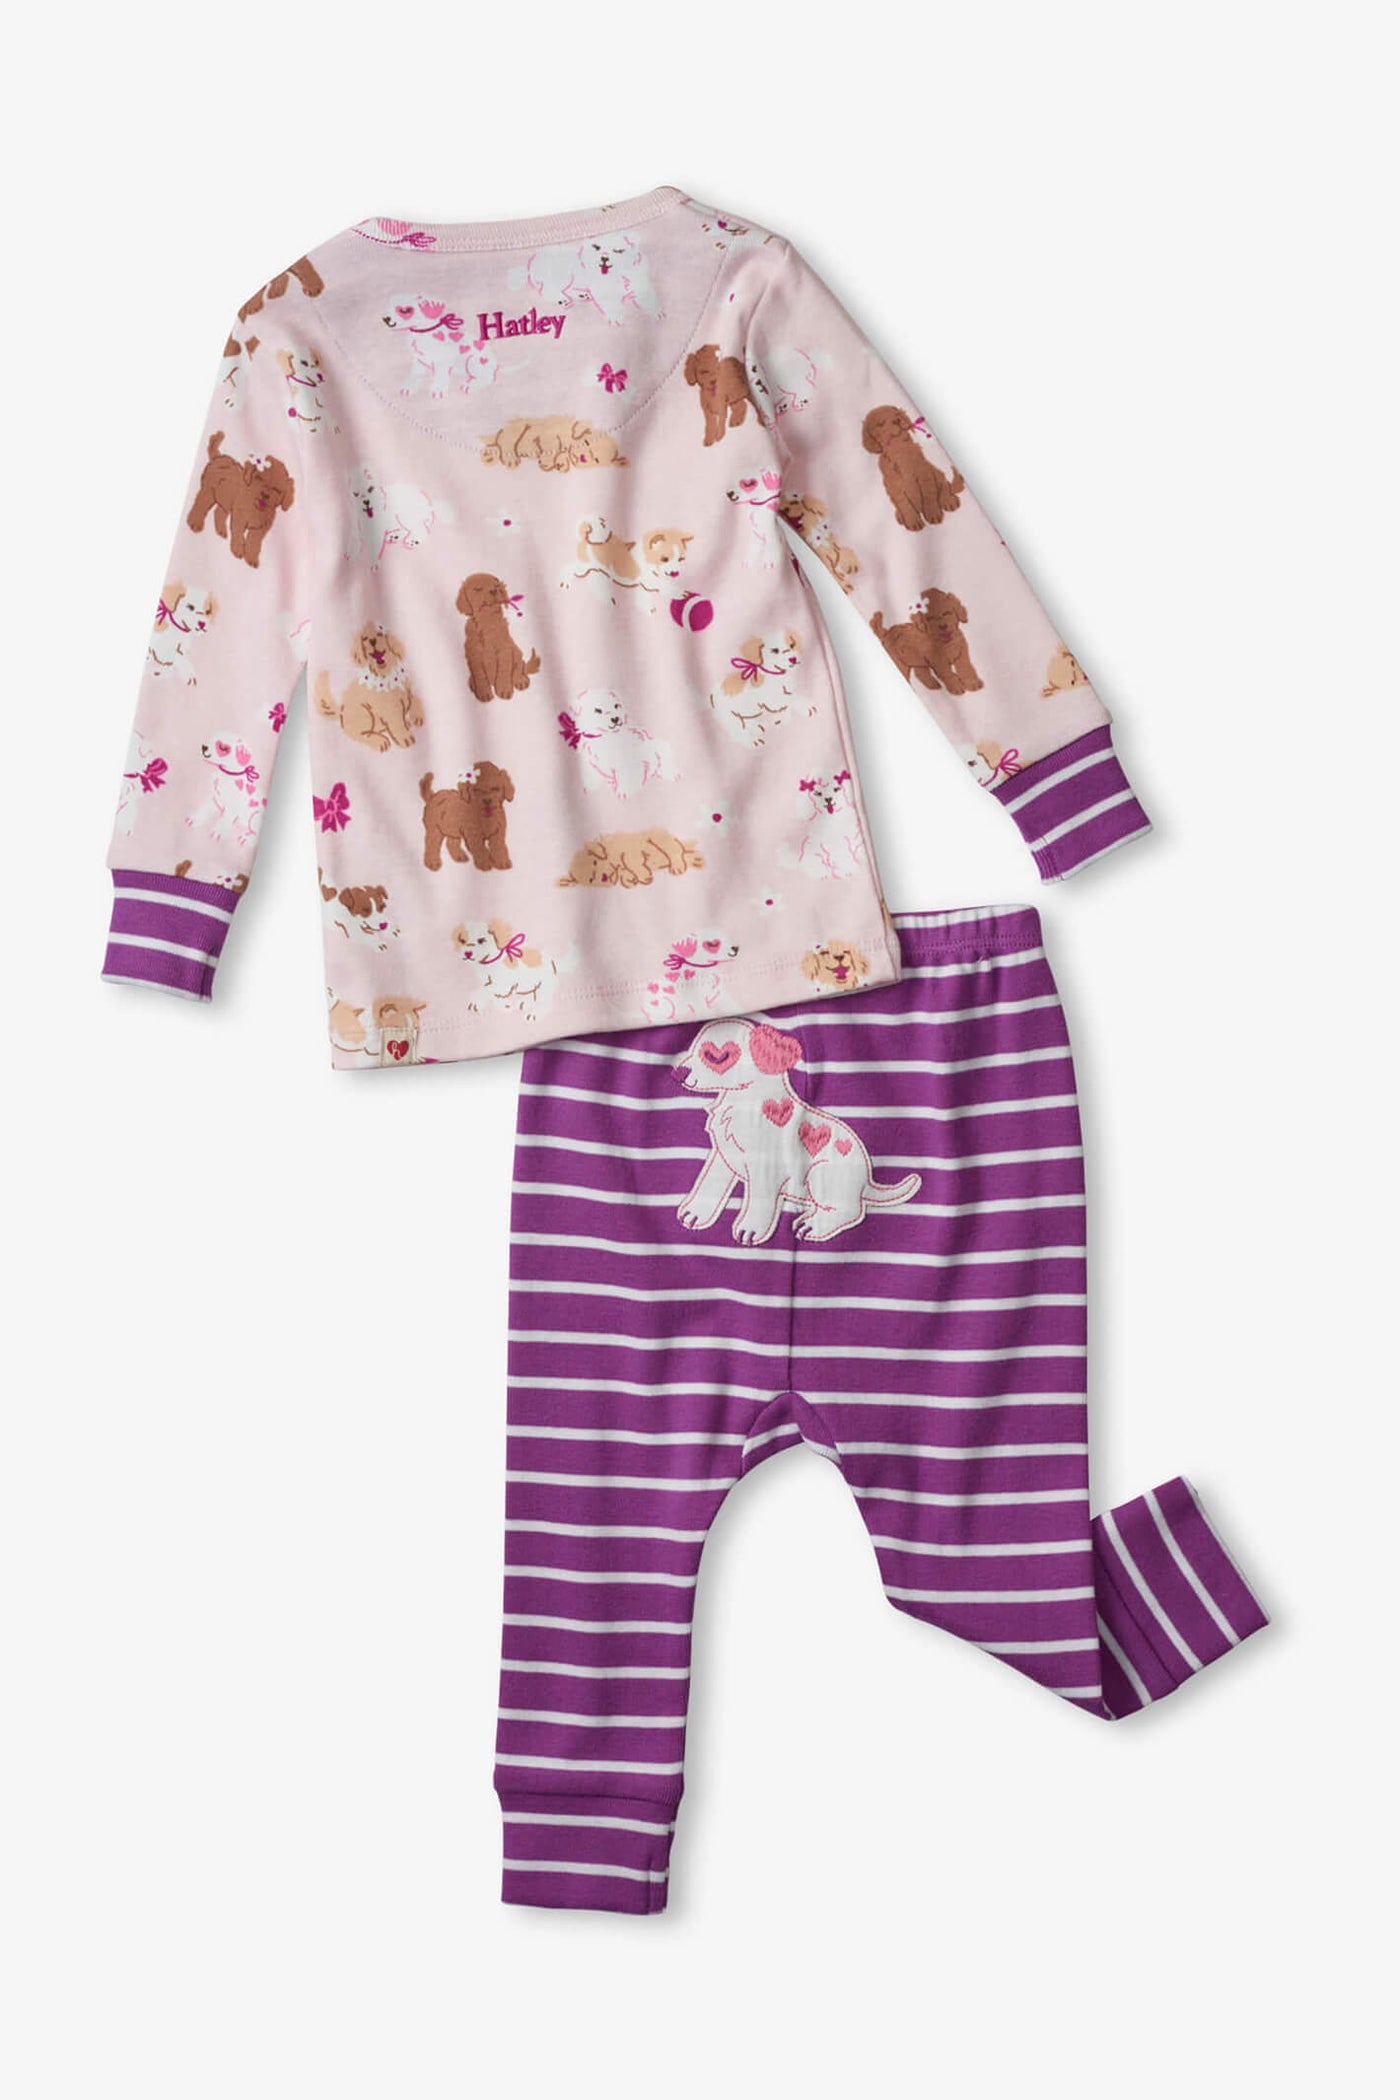 Hatley Flower Pups Organic Cotton Baby Pyjama Set - Wonder & Wild Kids